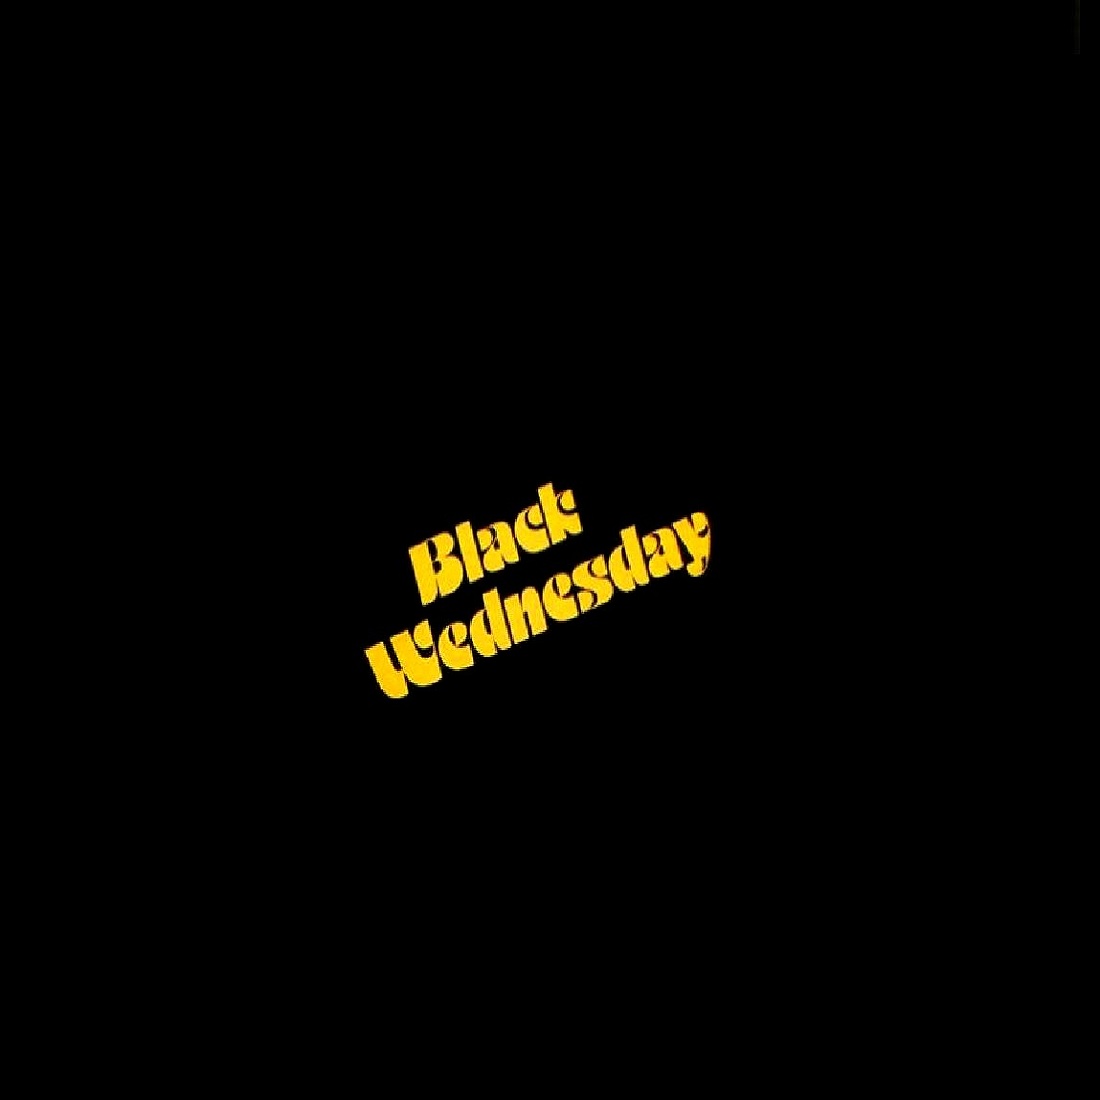 Black wed. Венздей 1979. Black Wednesday. Черные подкрадули Wednesday. Wednesday - Paint it Black картинки.